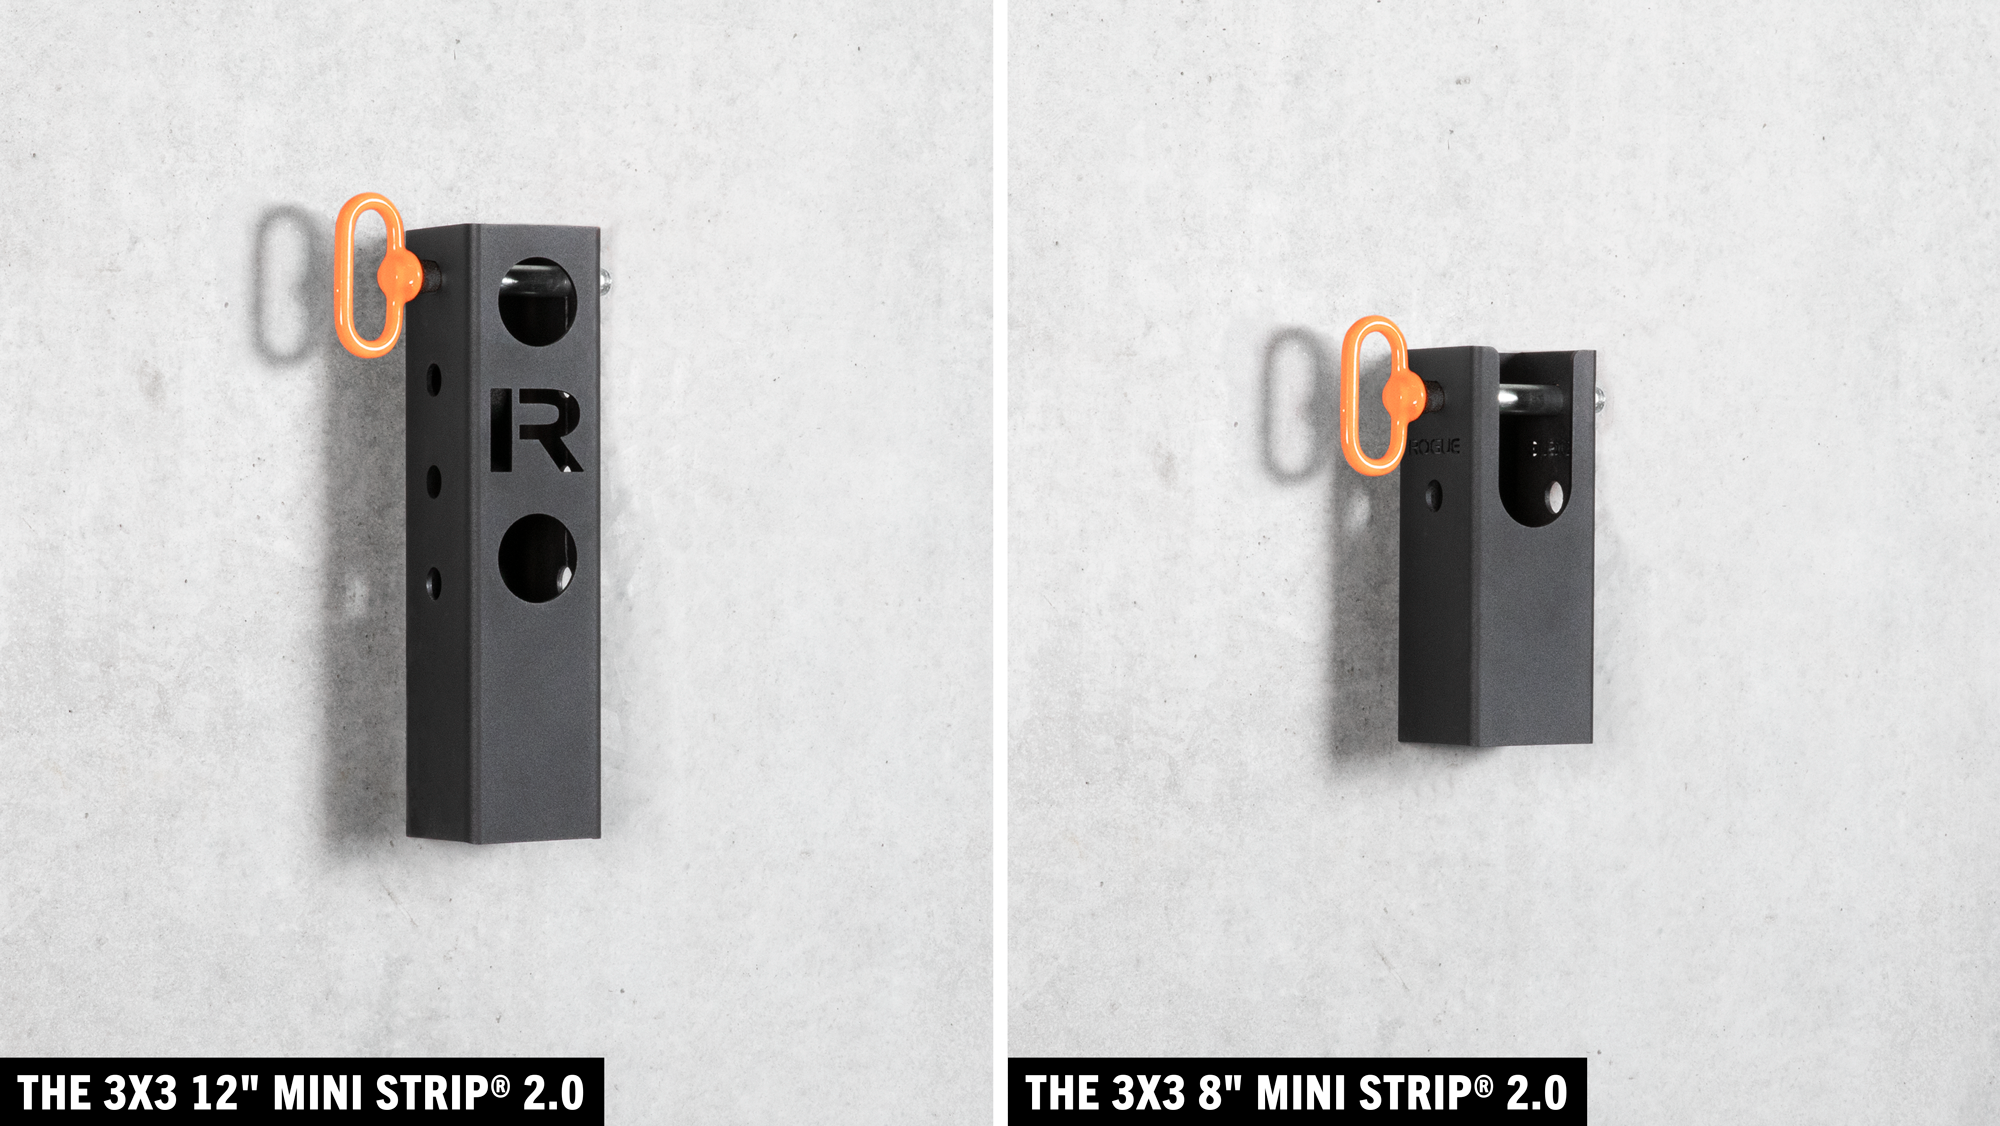 The 3x3 Mini Strip® 2.0